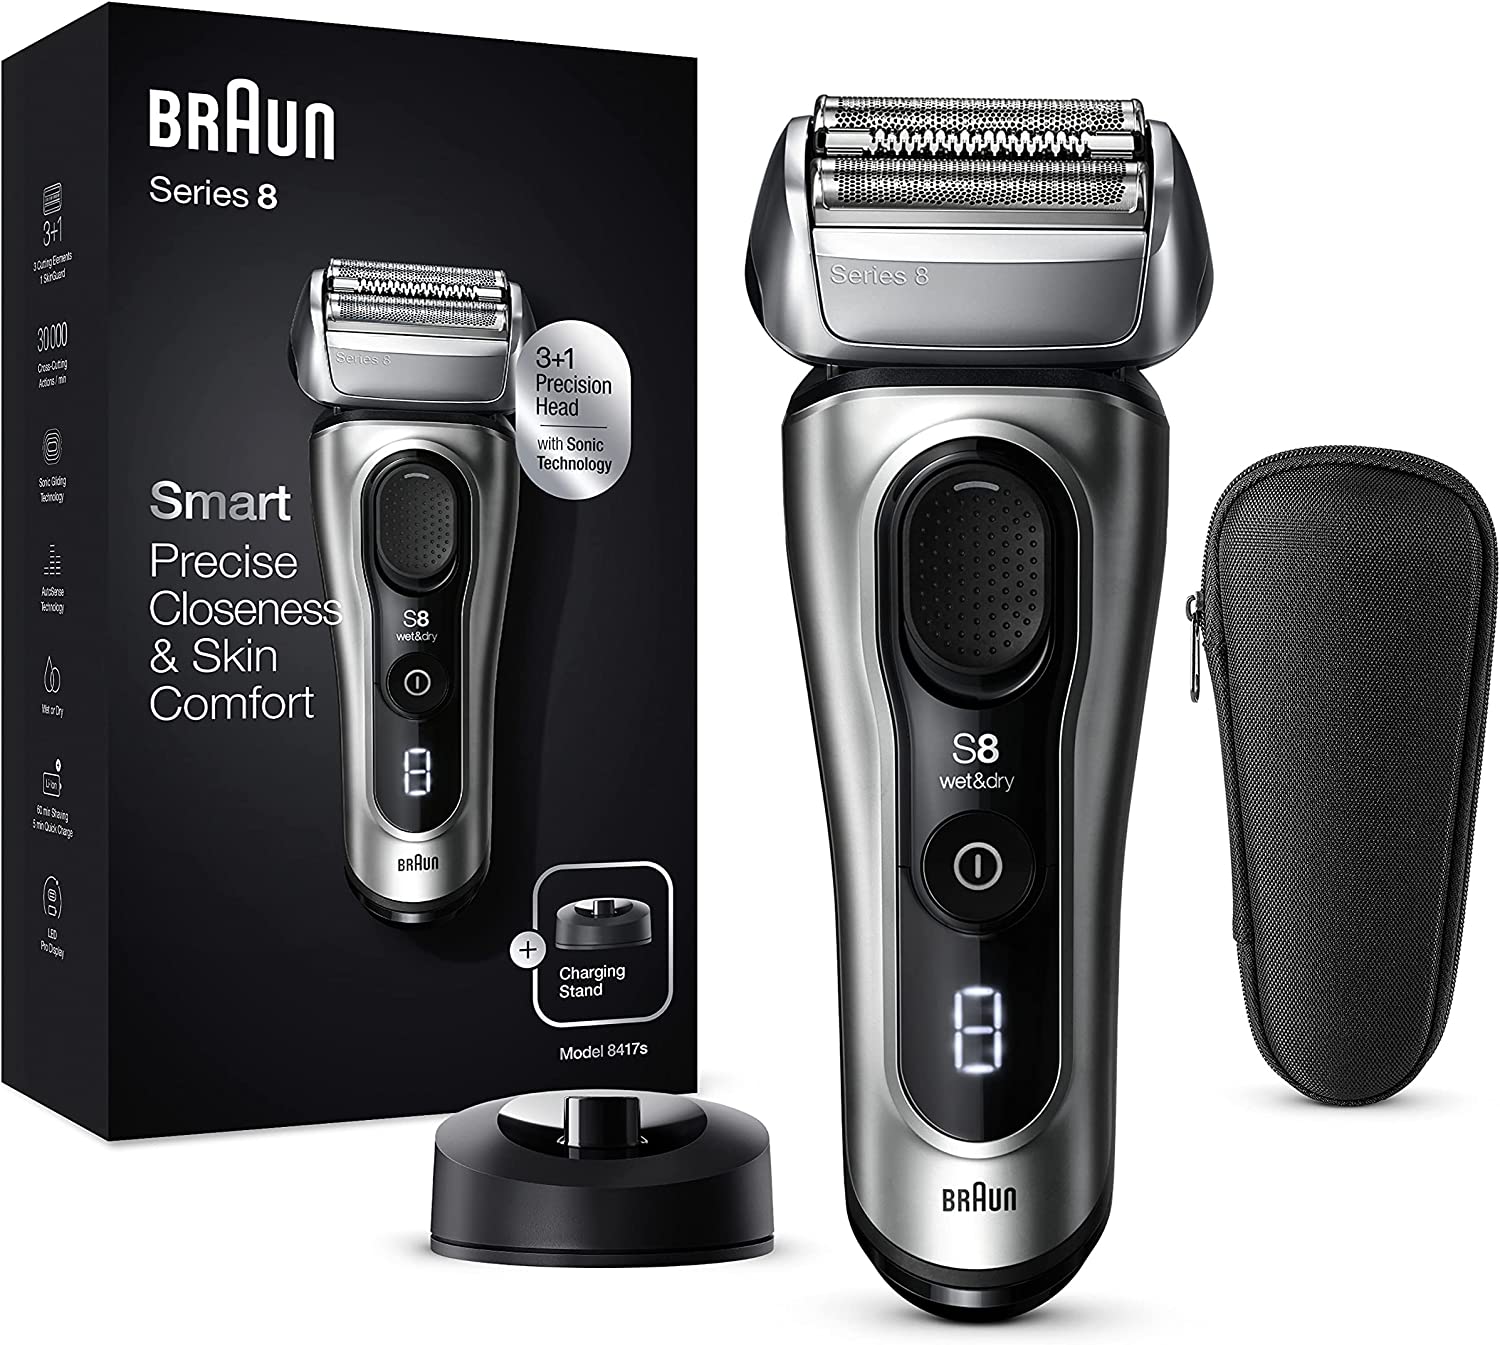 Braun Series 8 Electric Razor Foil Shaver, Silver and Black - 8417s